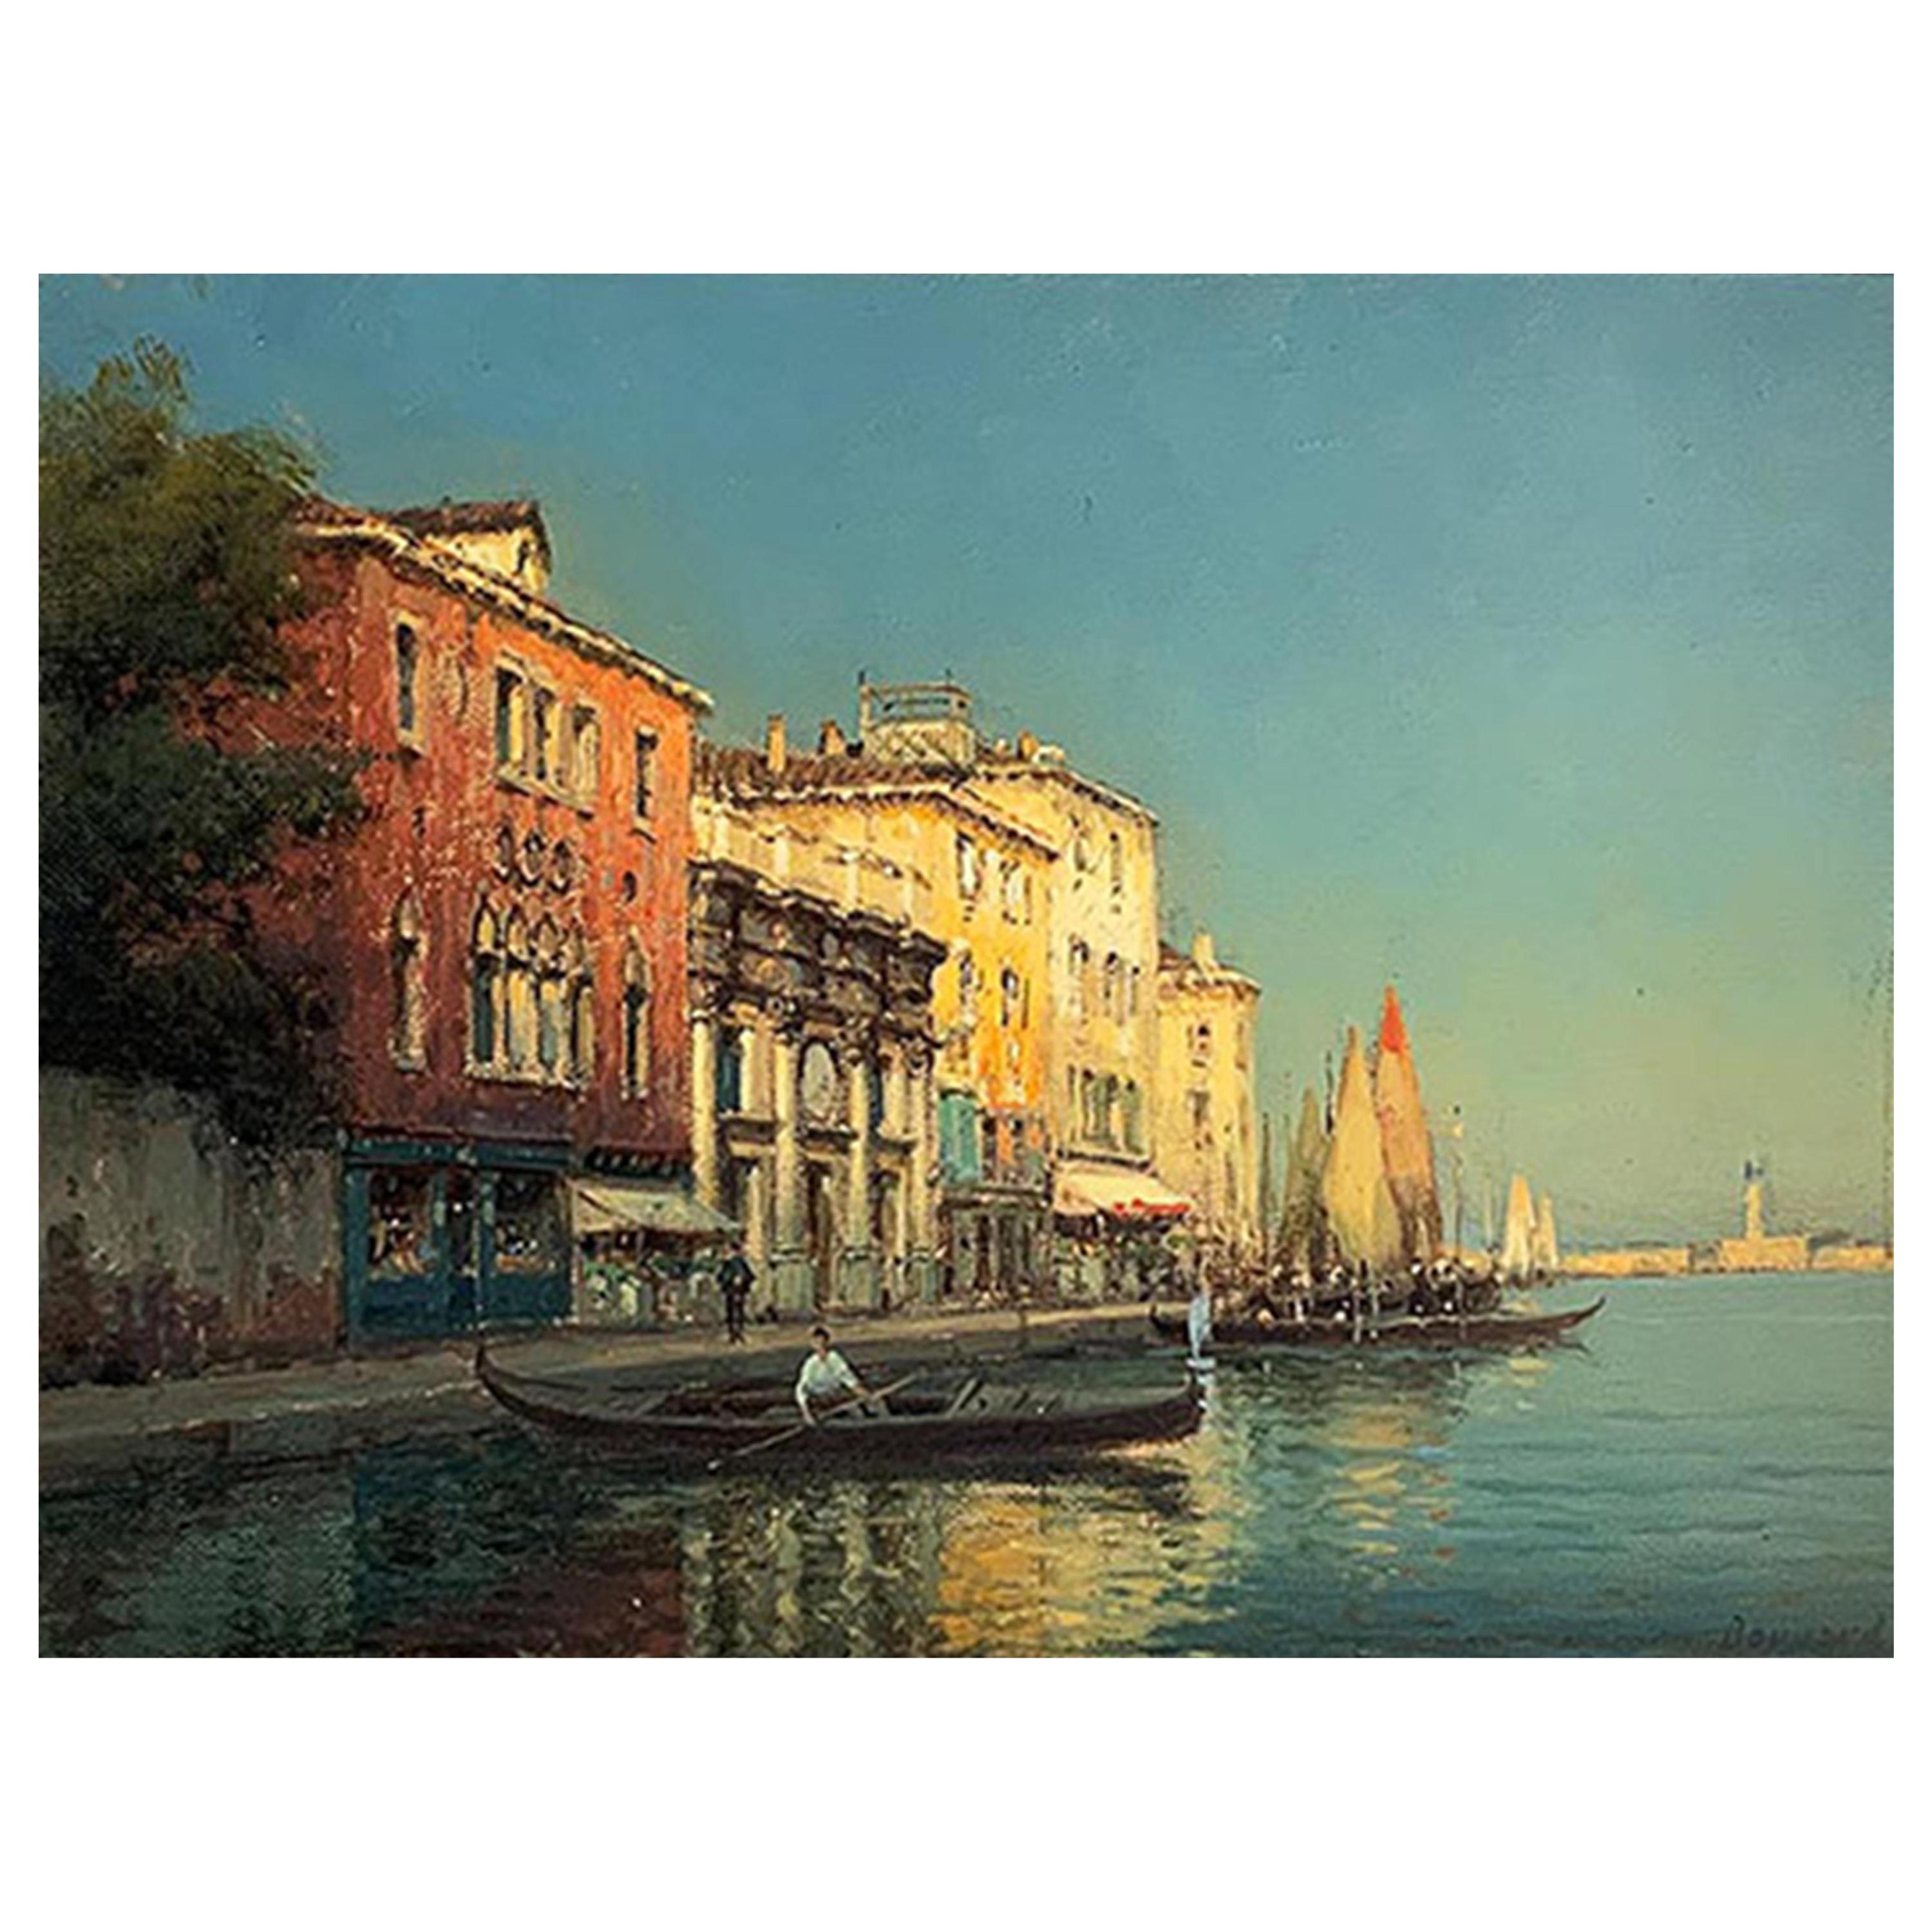 Bouvard Antoine '1870-1955/56' "View of Venice" For Sale